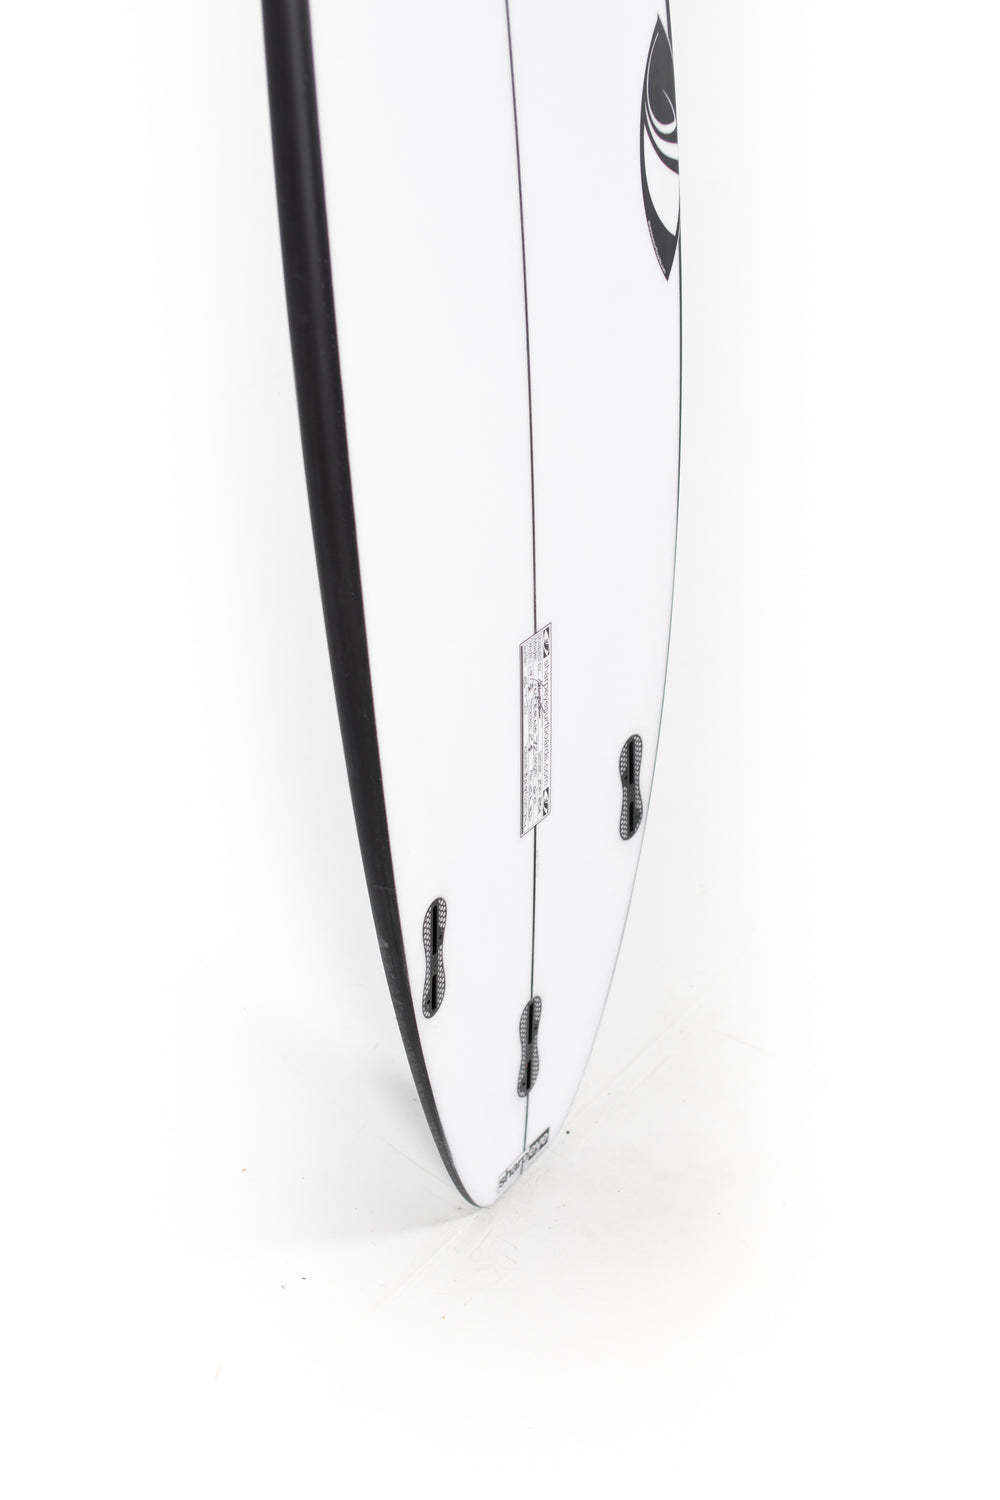 Sharpeye Surfboards - INFERNO 72 PRO by Marcio Zouvi 6'0